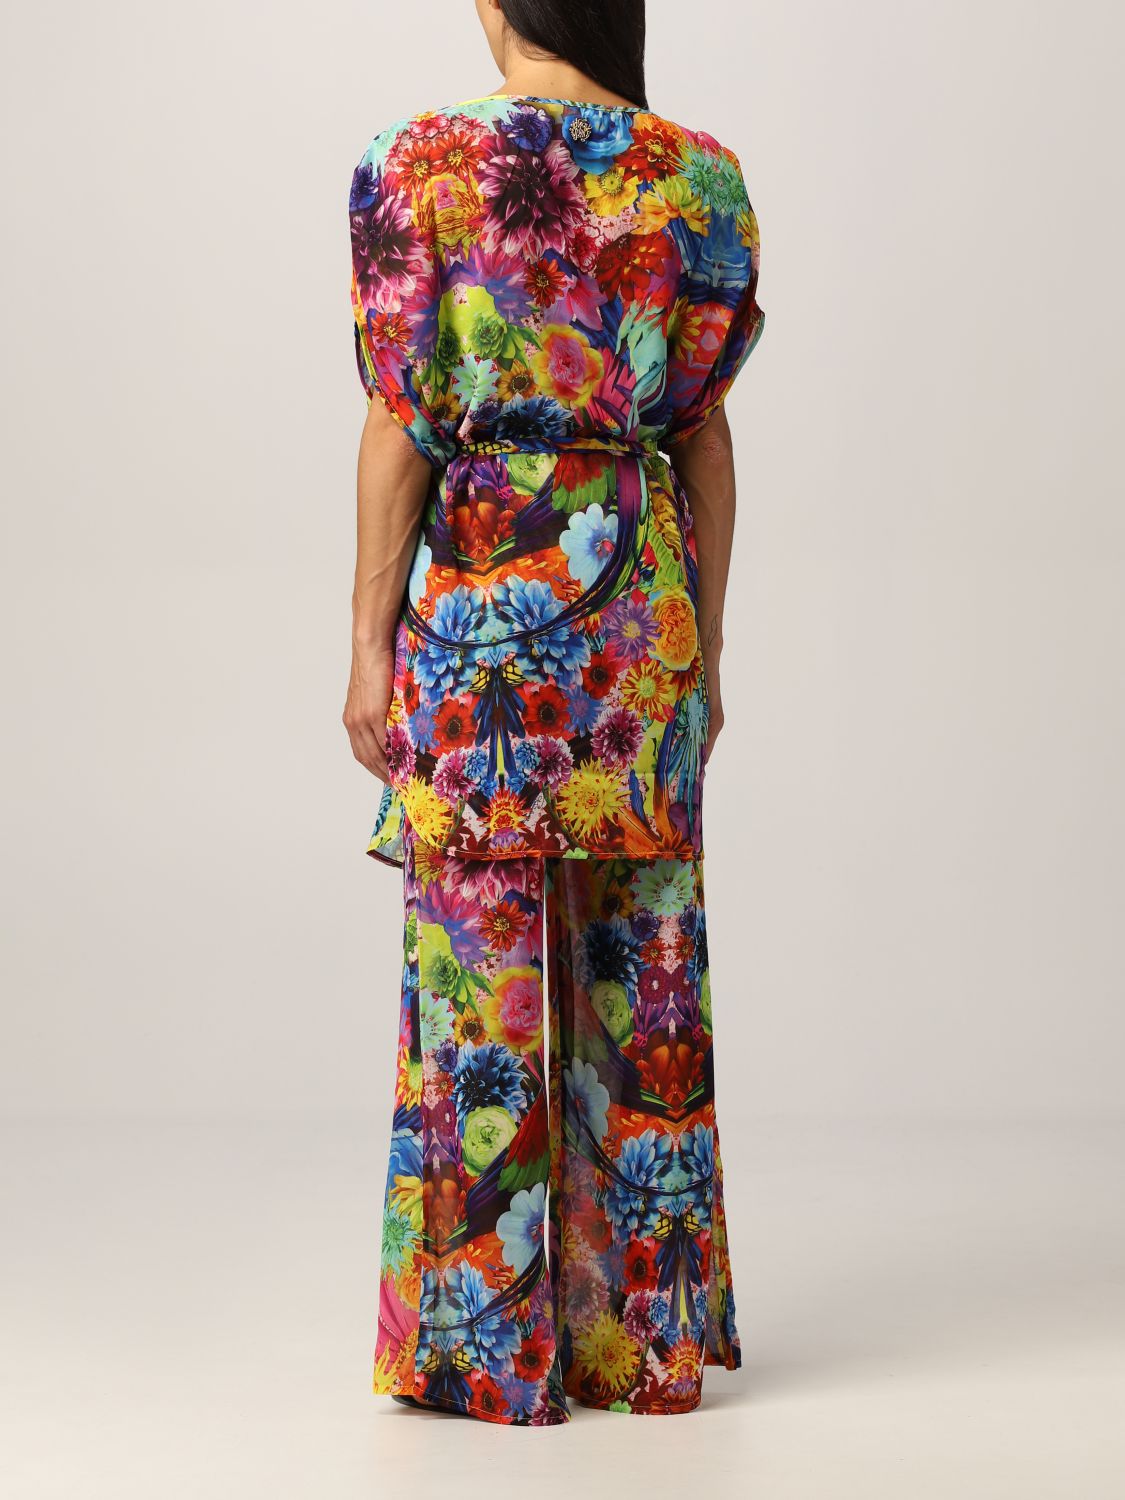 Comorama ik heb honger lood Roberto Cavalli Outlet: dress for woman - Multicolor | Roberto Cavalli  dress HSW03K-A609 online on GIGLIO.COM